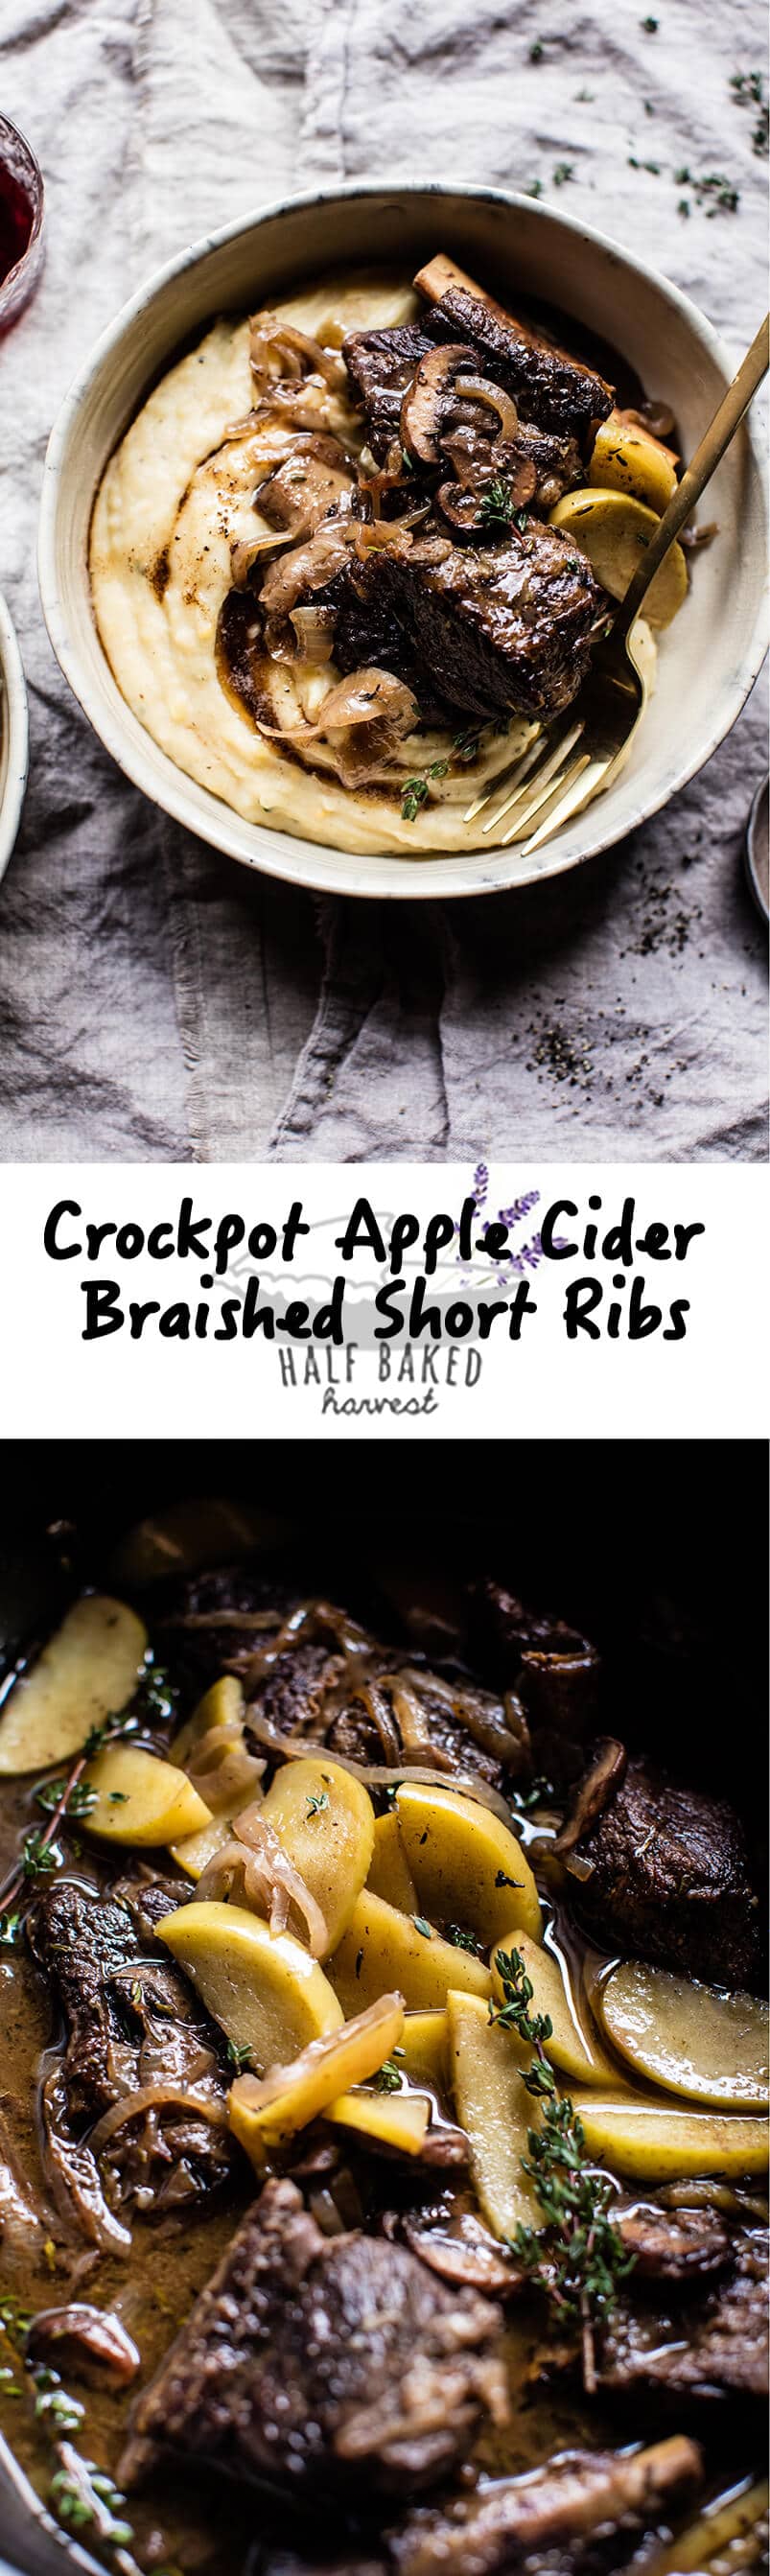 Crockpot苹果酒烩短肋配鼠尾草黄油土豆泥|半烤harvest.com @hbharvest